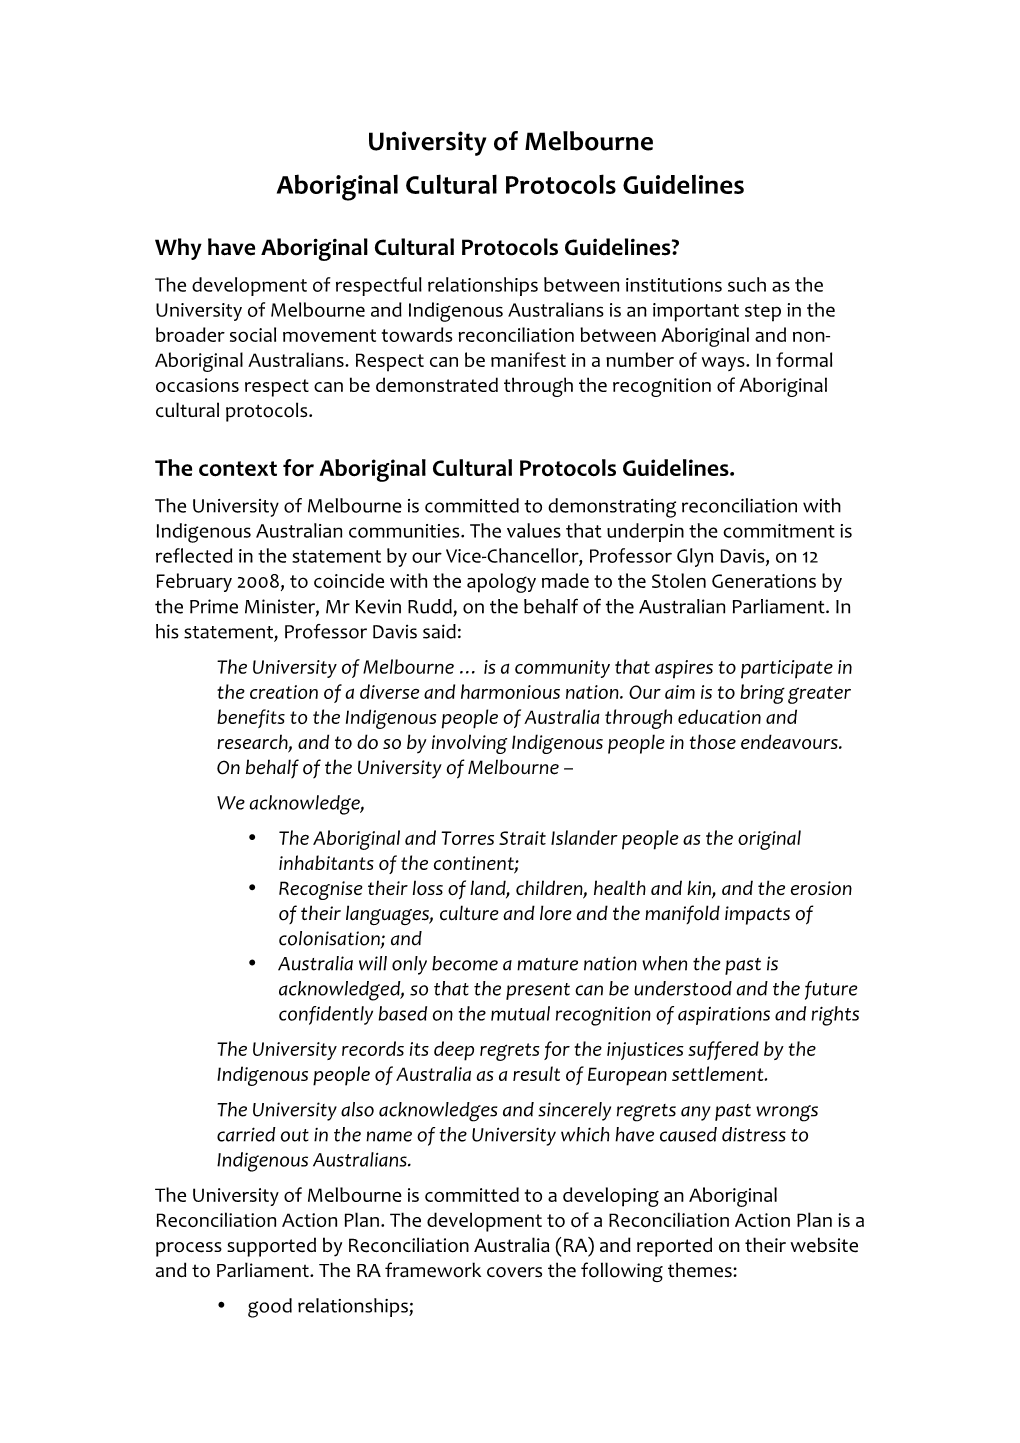 University of Melbourne Aboriginal Cultural Protocols Guidelines